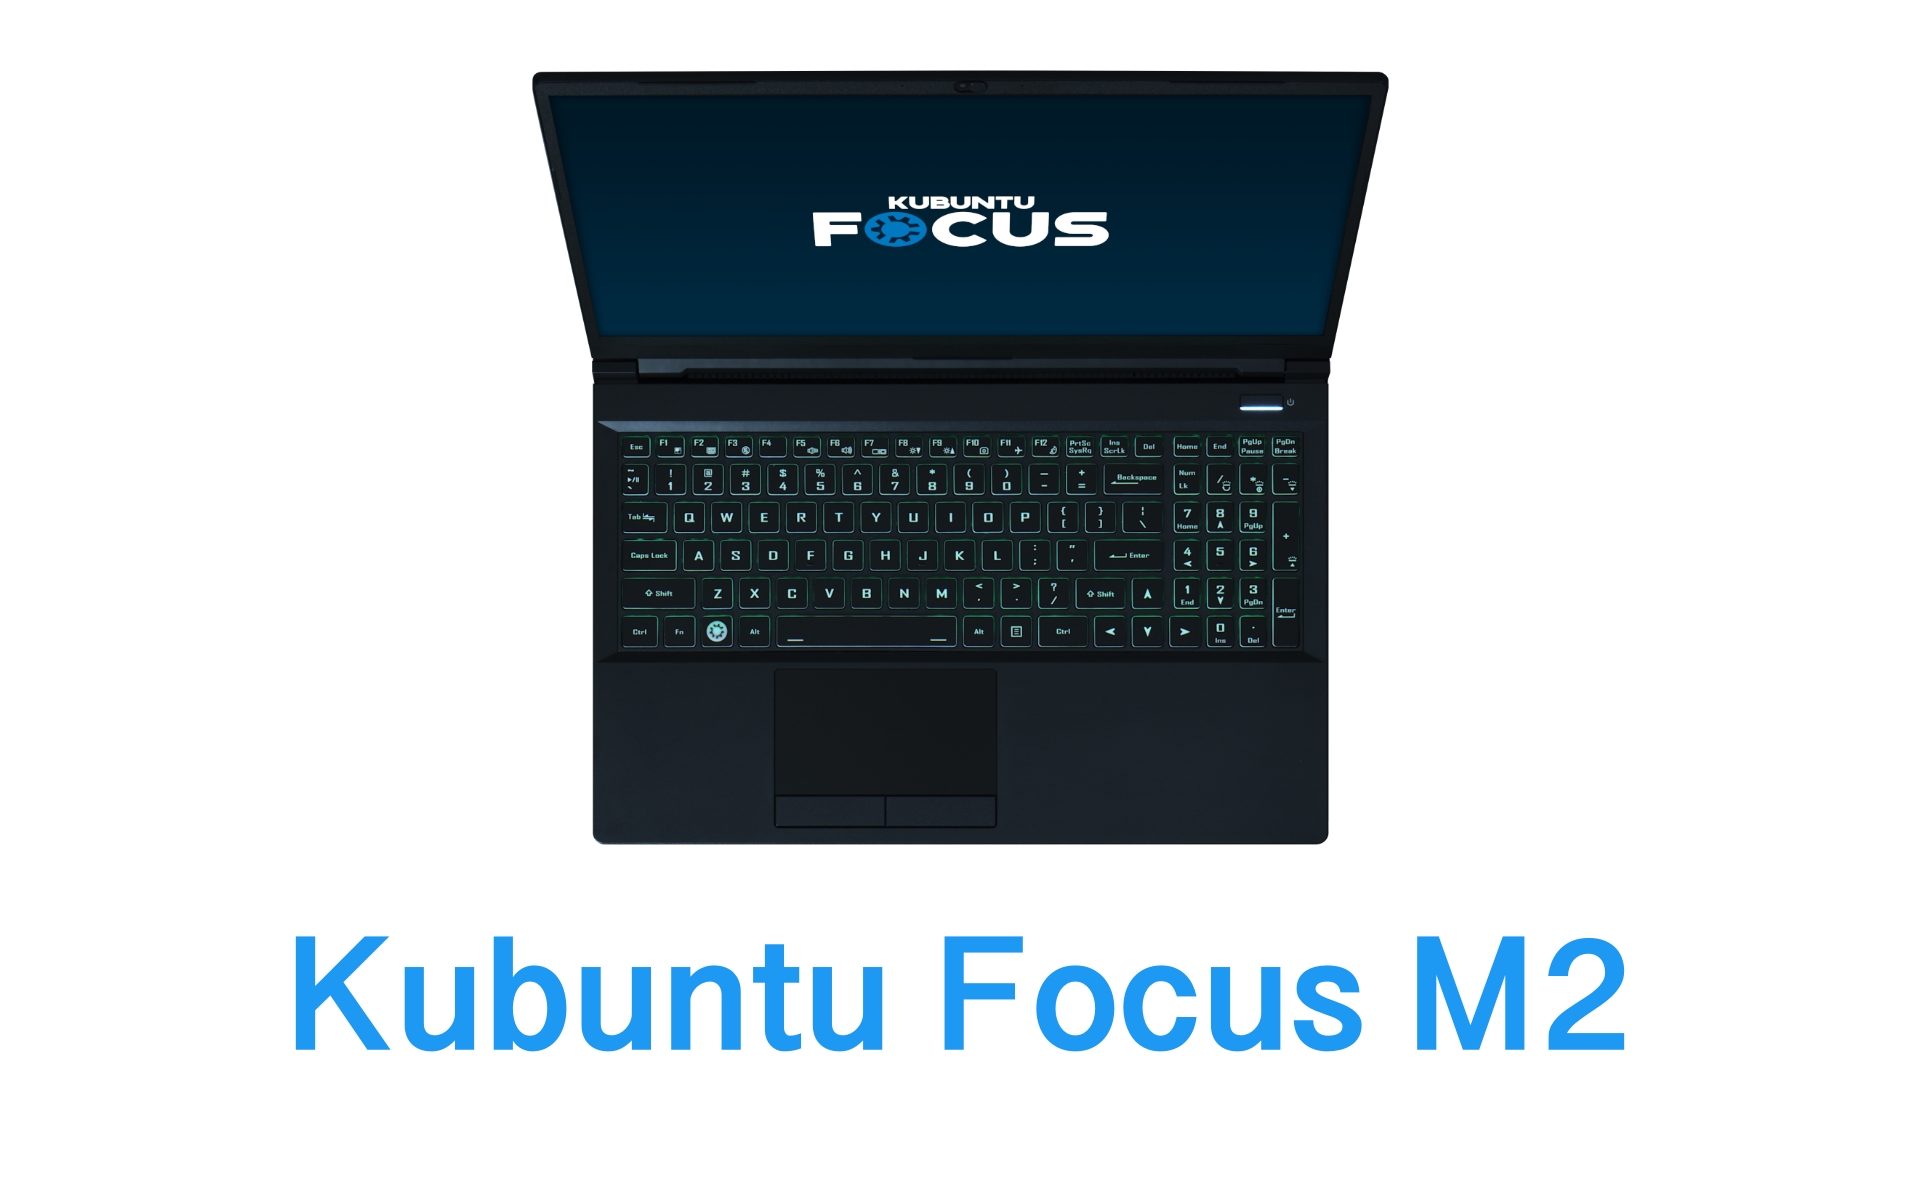 Kubuntu Focus M2 Linux Laptop Launches with Kubuntu 20.04 LTS, Updated Design